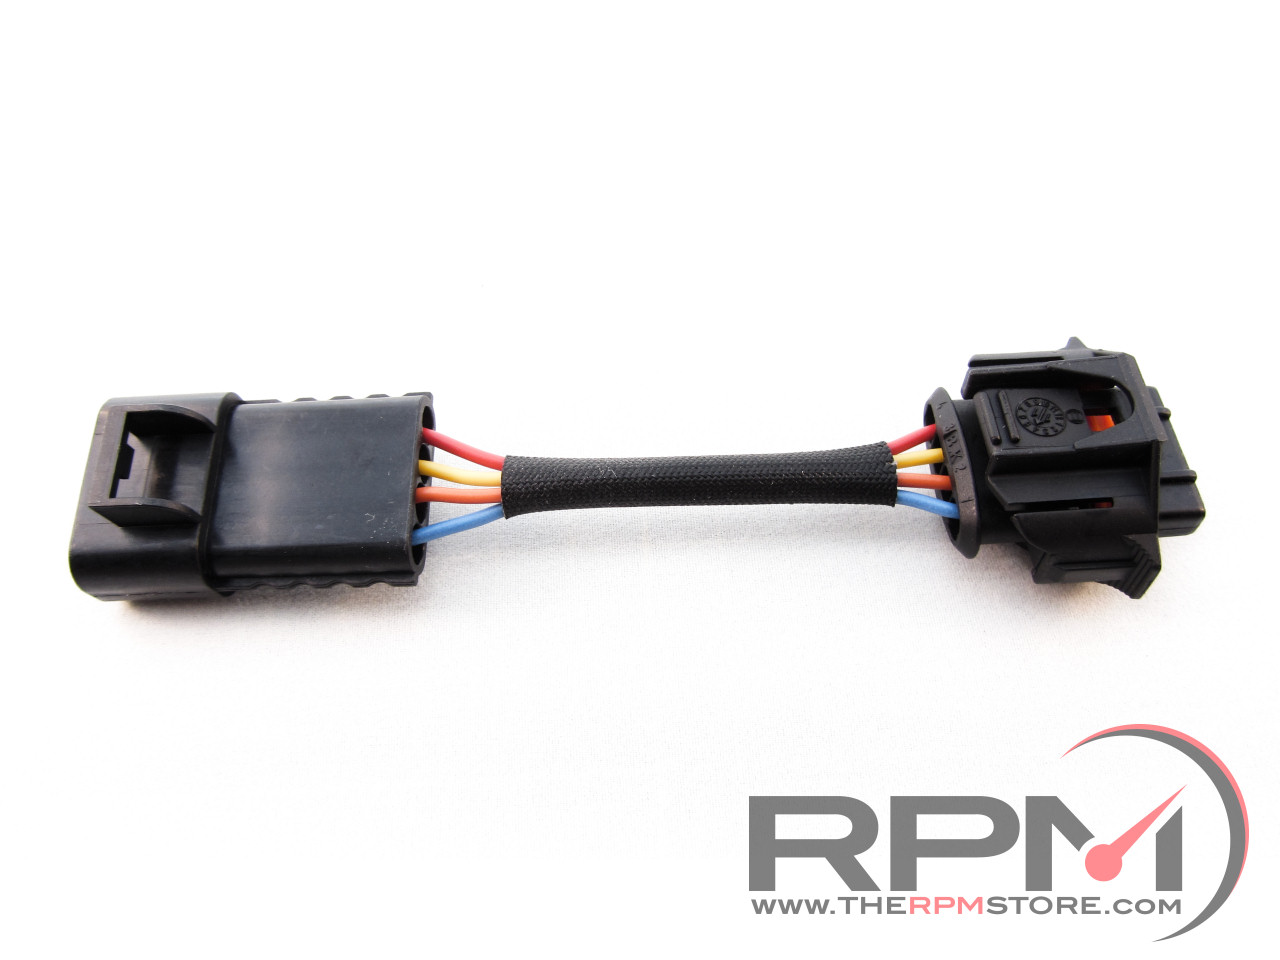 RPM Bosch MAP Sensor Adapter Harness for Mazdaspeed 3 / 6 / CX-7 